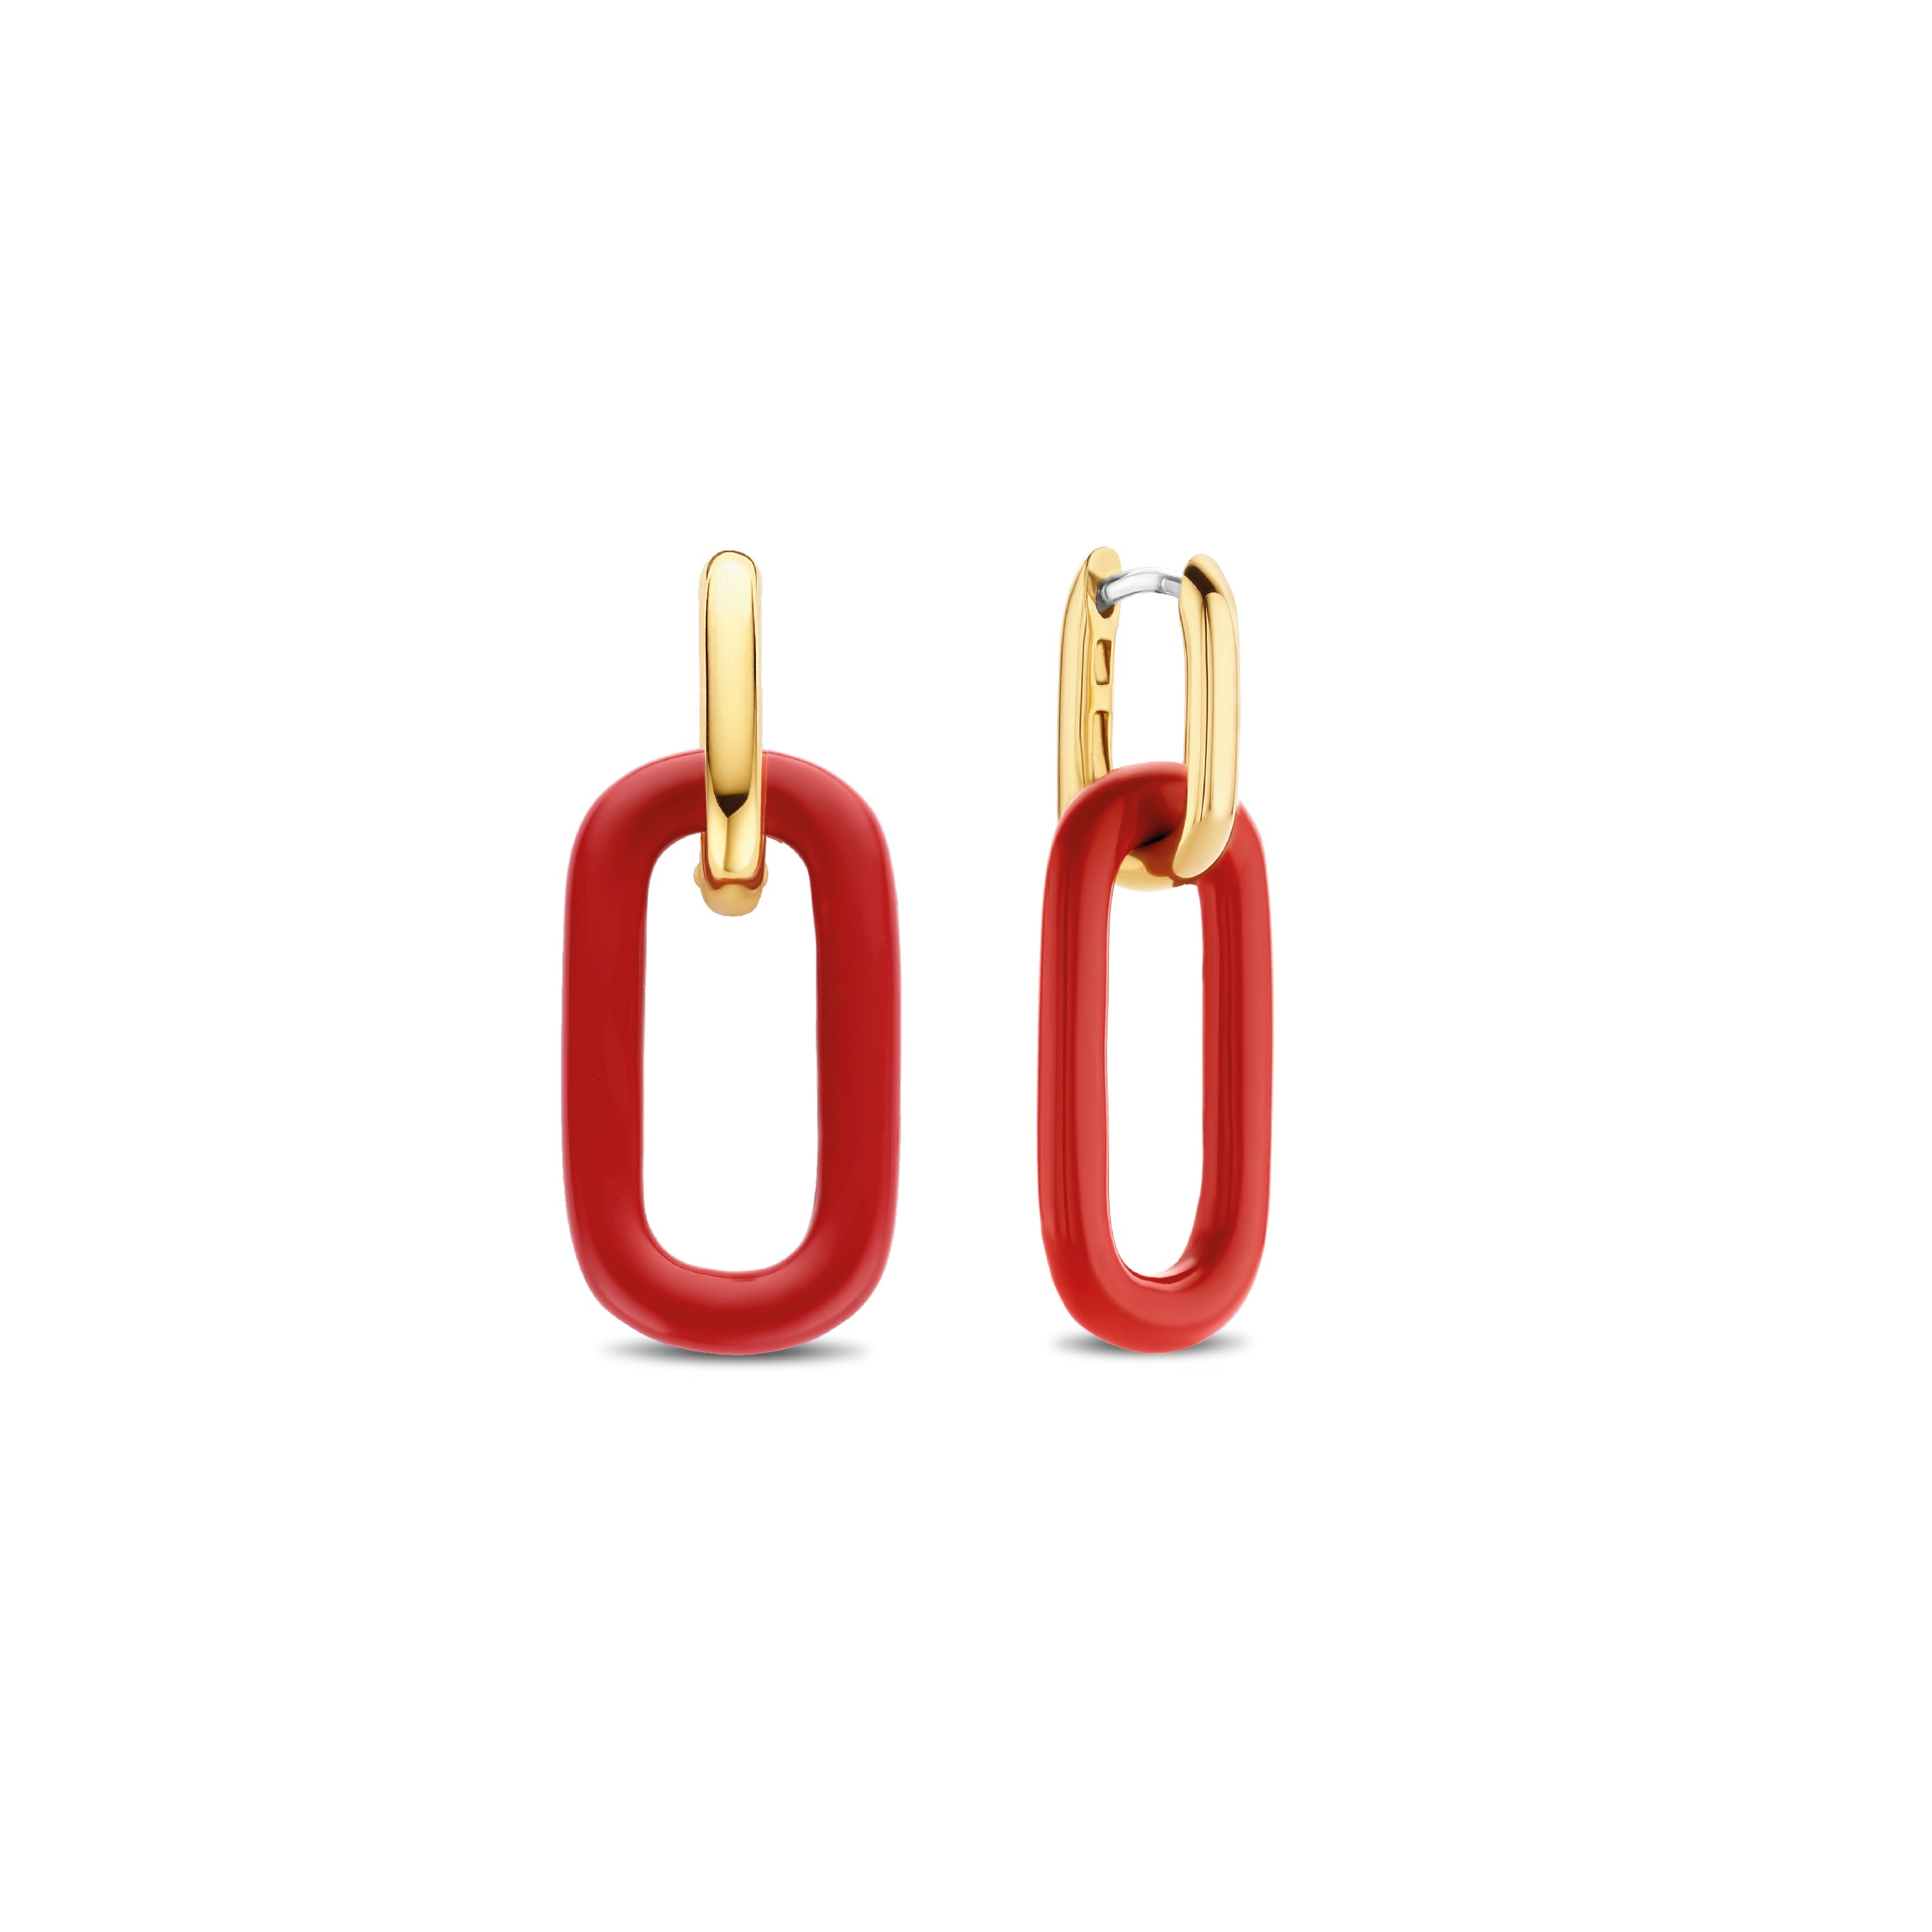 TI SENTO - Milano Earrings 7843CR Gala Jewelers Inc. White Oak, PA